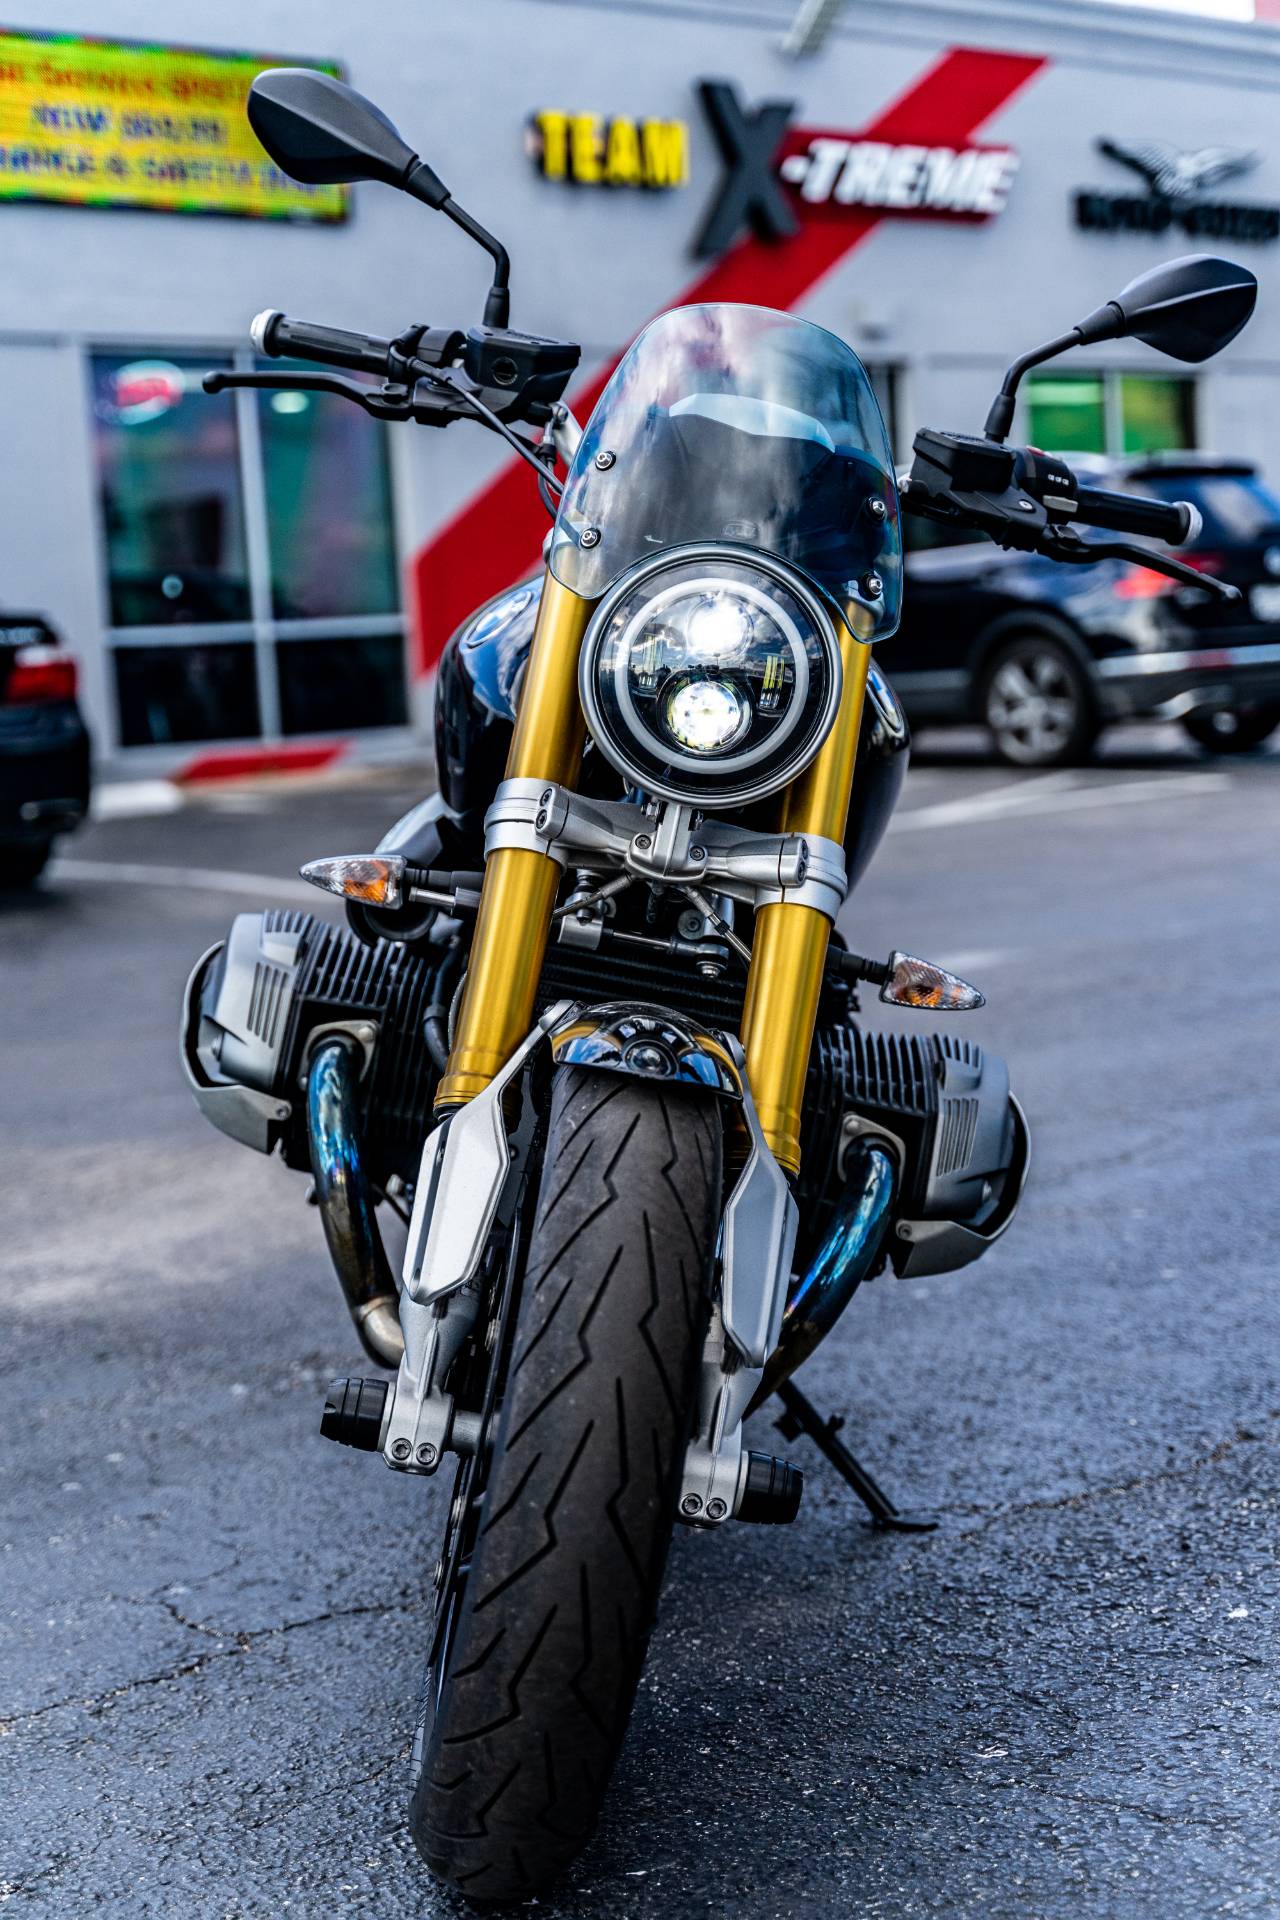 Bmw Motorcycles Houston Club / 2019 BMW G310GS for sale near Houston